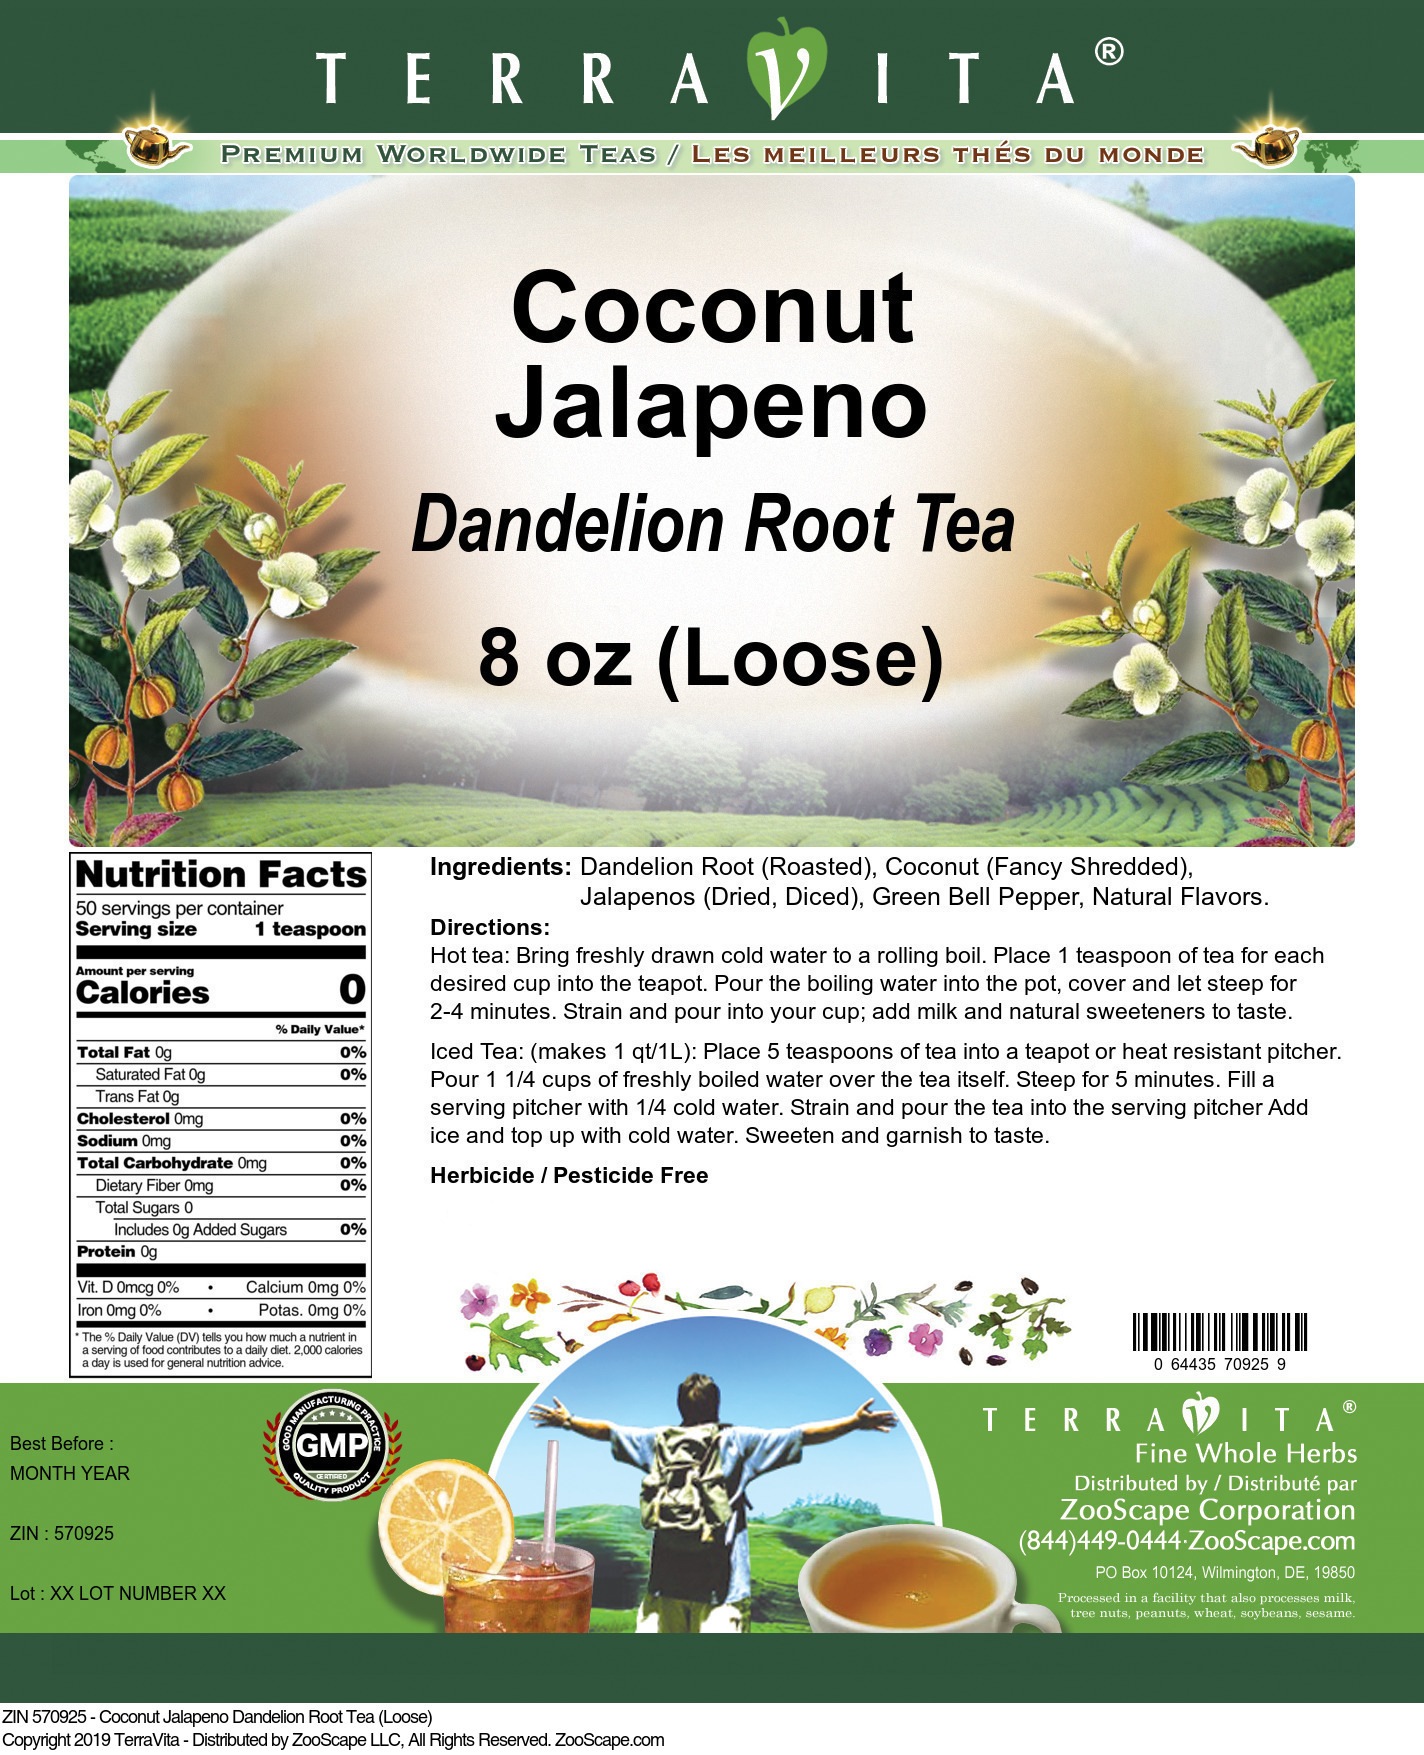 Coconut Jalapeno Dandelion Root Tea (Loose) - Label